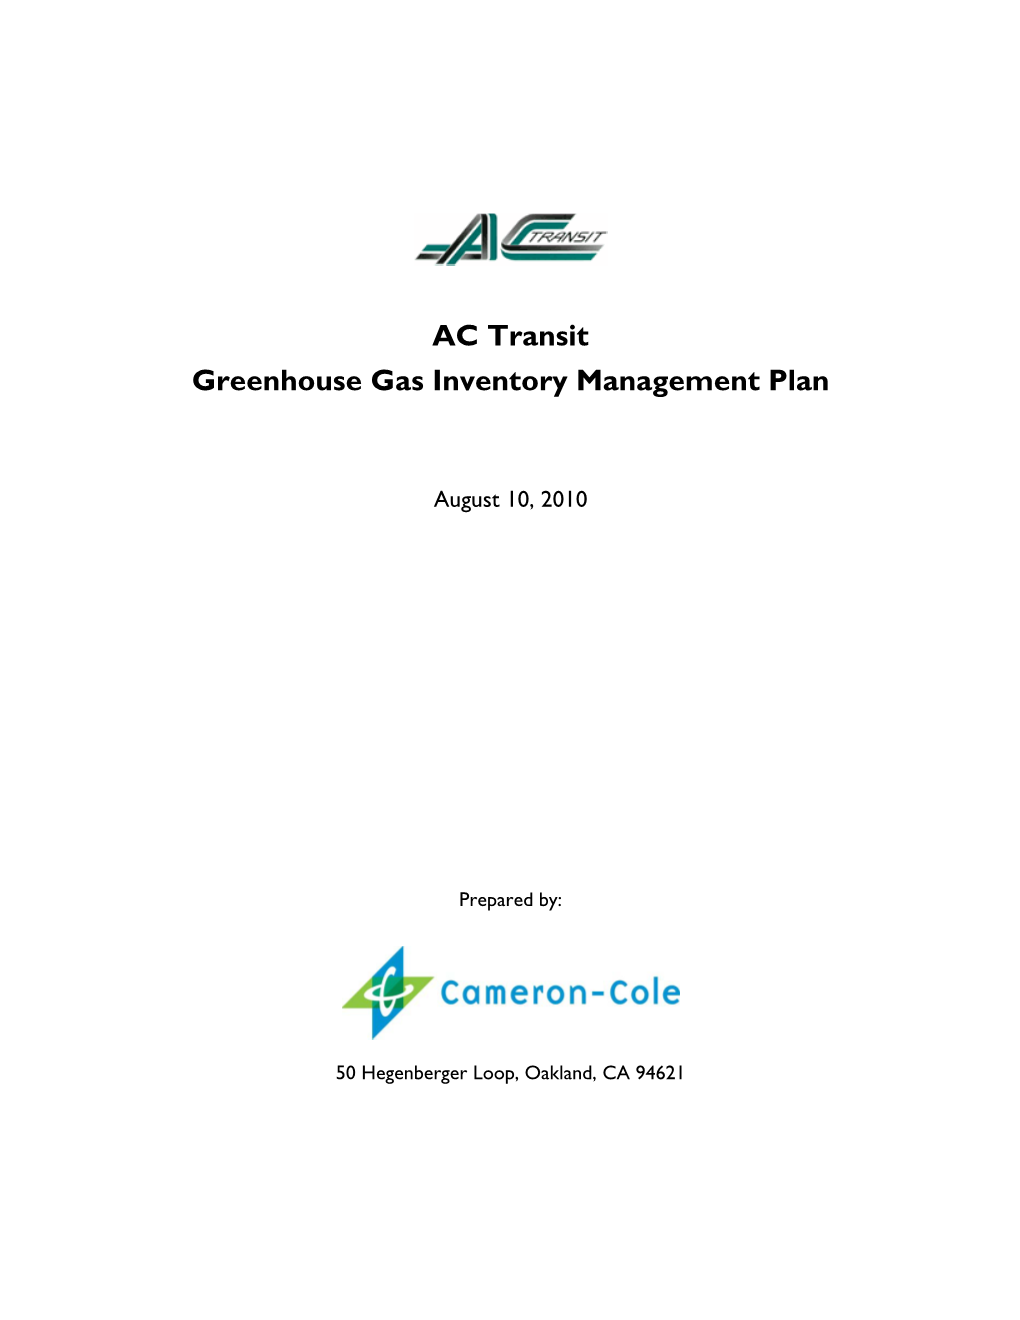 AC Transit Greenhouse Gas Inventory Management Plan